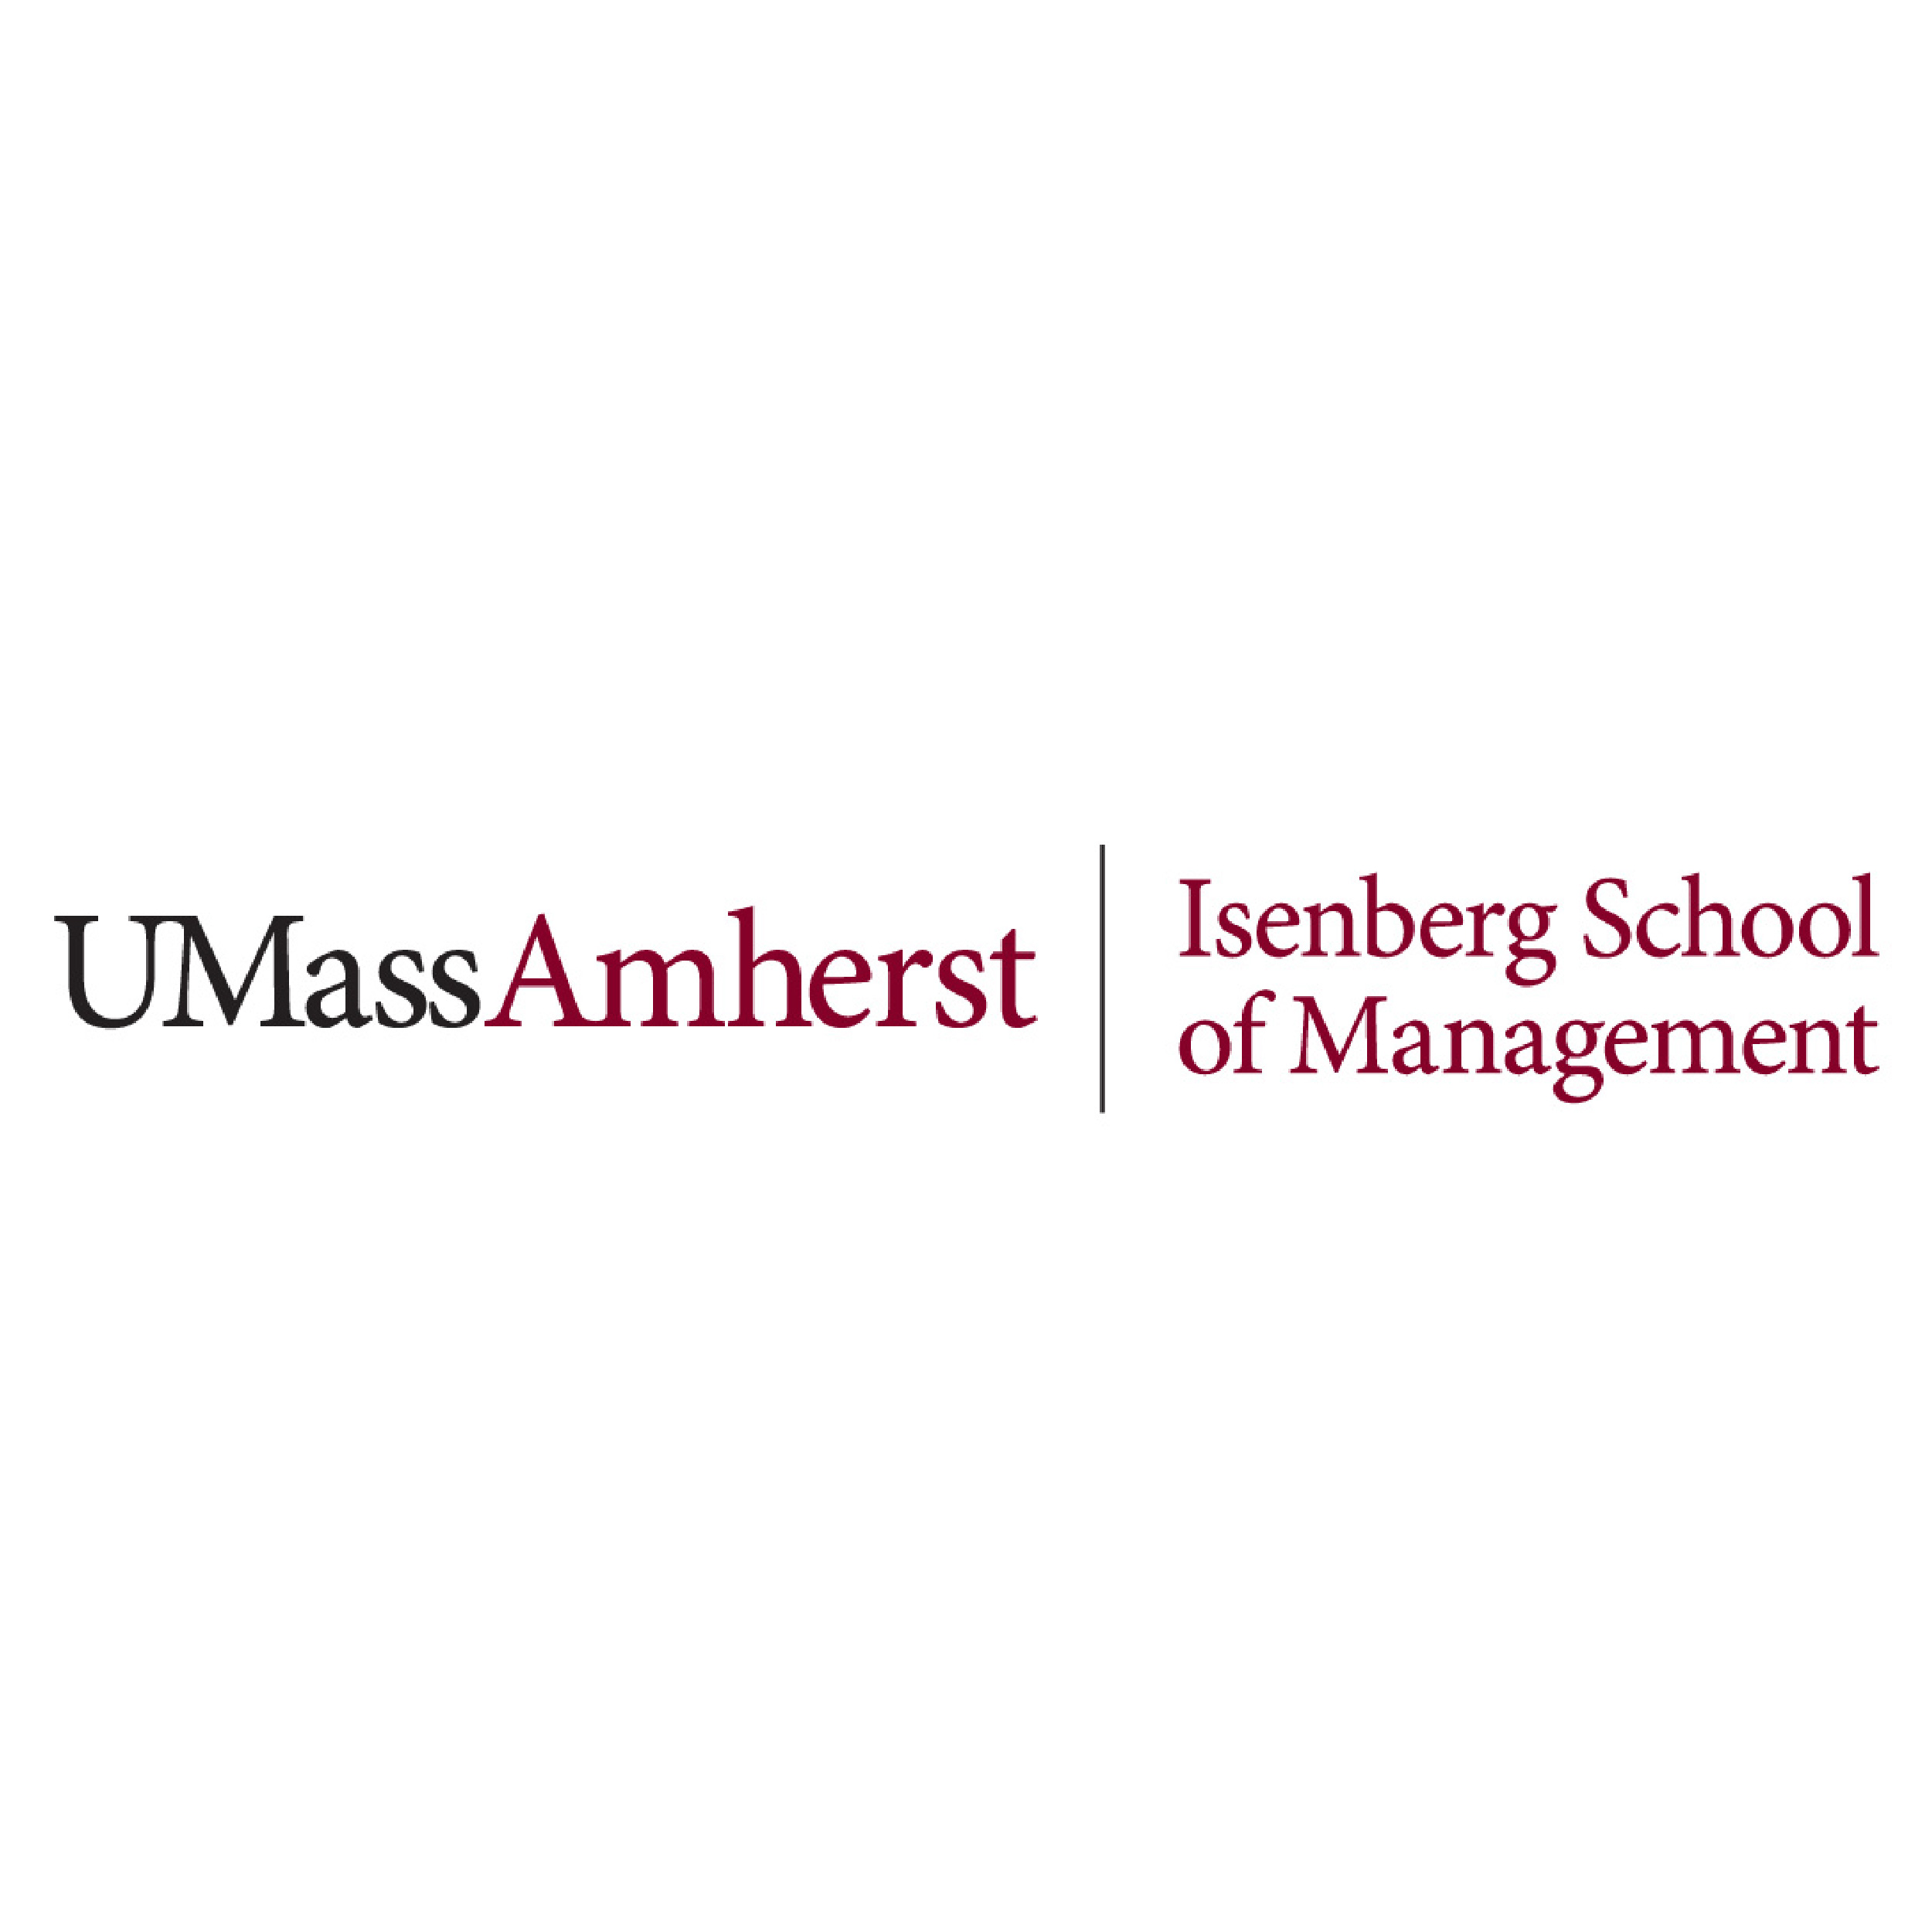 UMass Amherst Isenberg School of Management